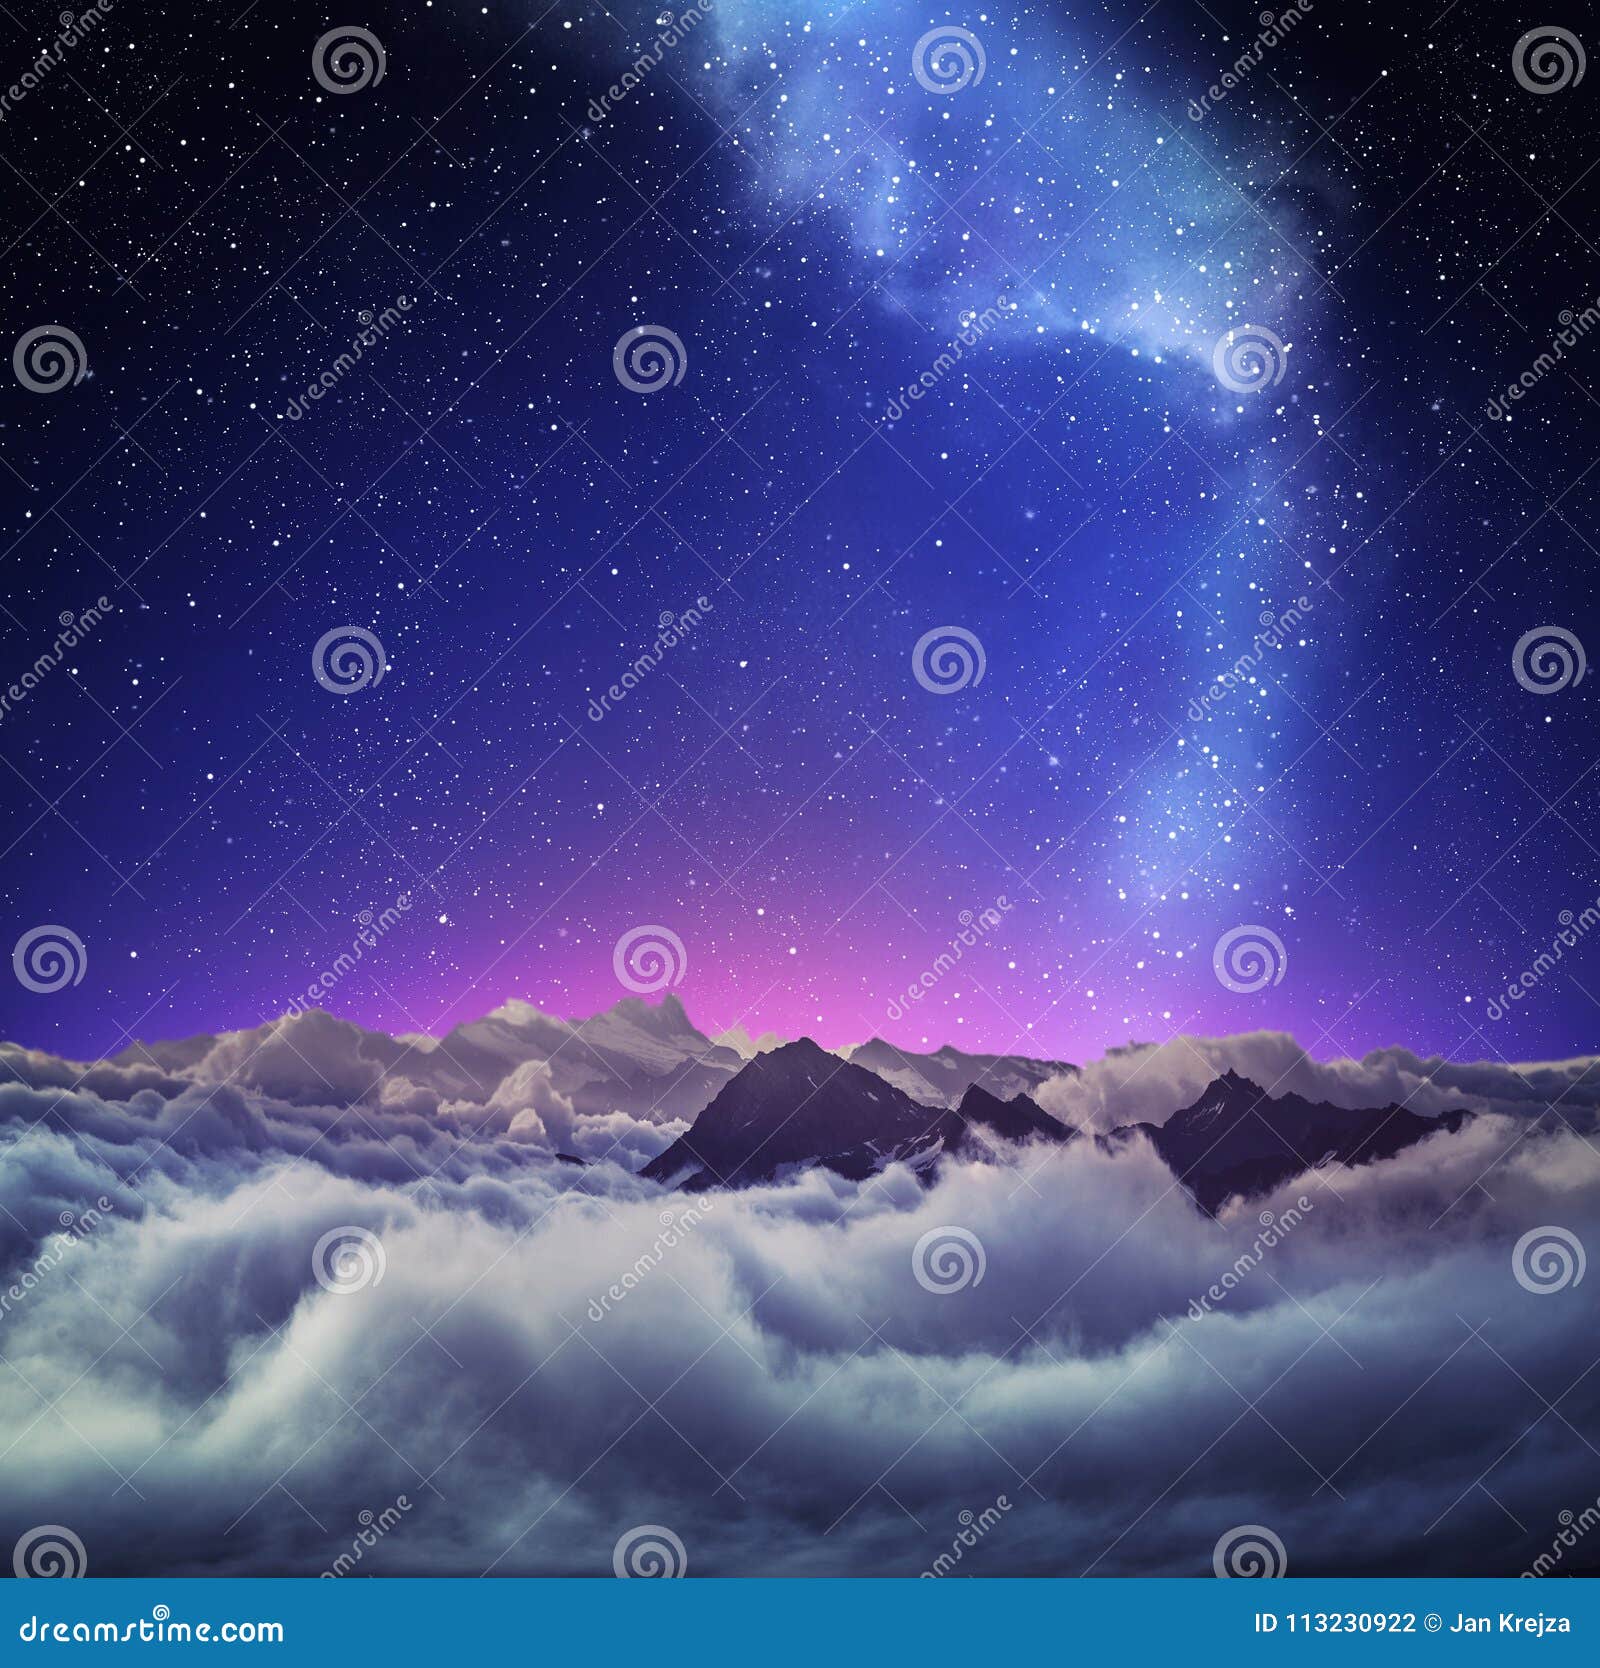 Night Sky Phone Wallpaper 75 images